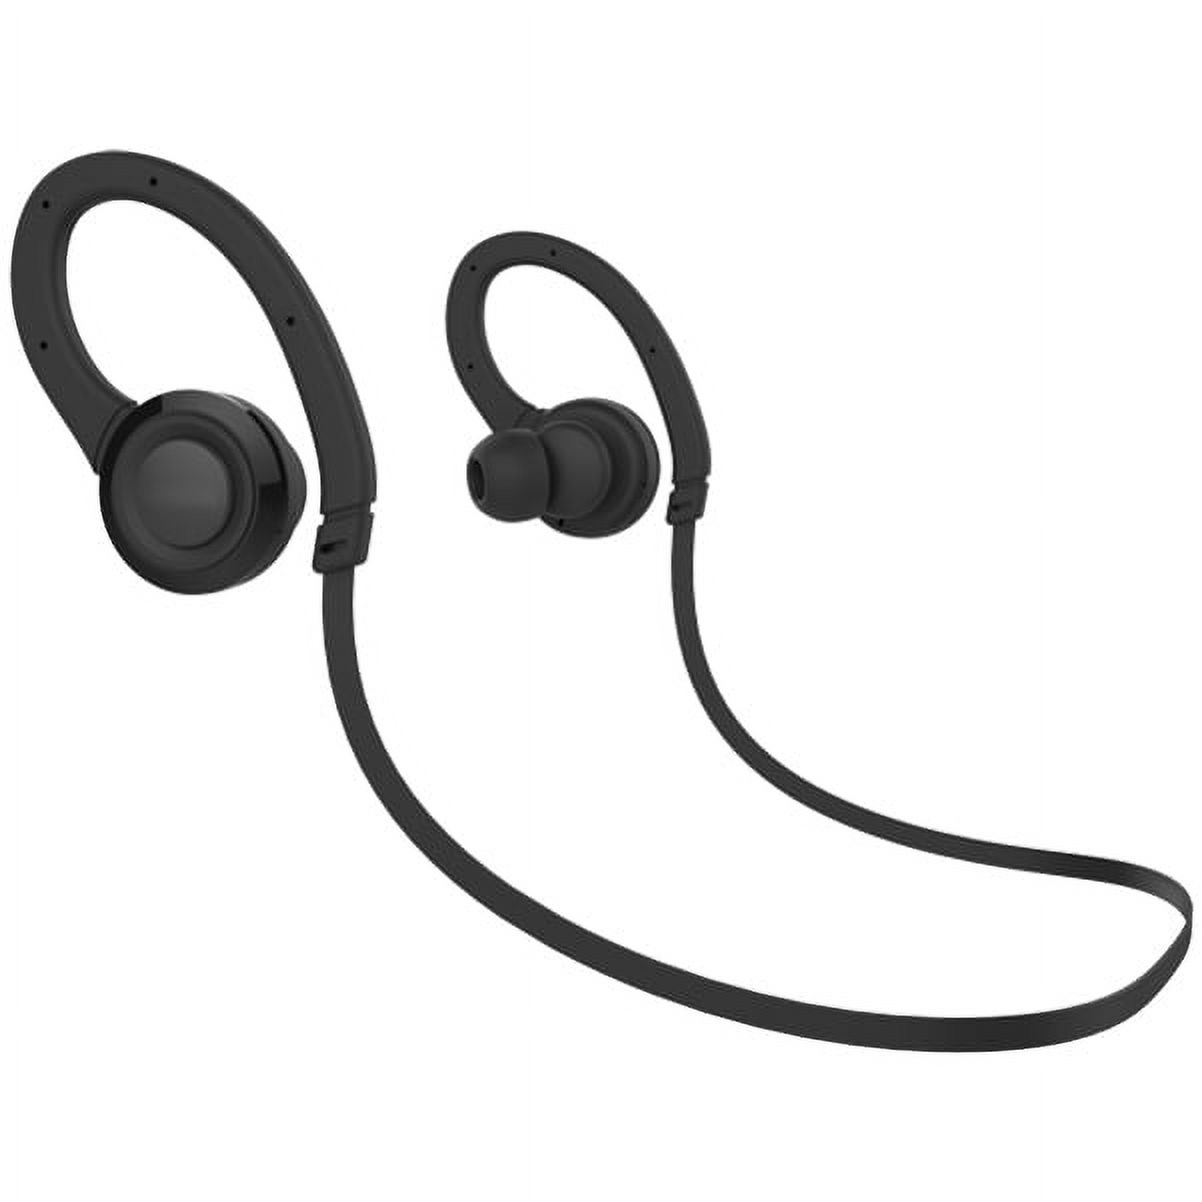 Sweatproof Hi-Fi Sports Headset Wireless Earphones Mic Premium Sound Earbuds Handsfree [Black] Compatible With Alcatel Onyx - LG V50 ThinQ 5G, G8 ThinQ - Motorola Moto G7 Power Play - image 1 of 6